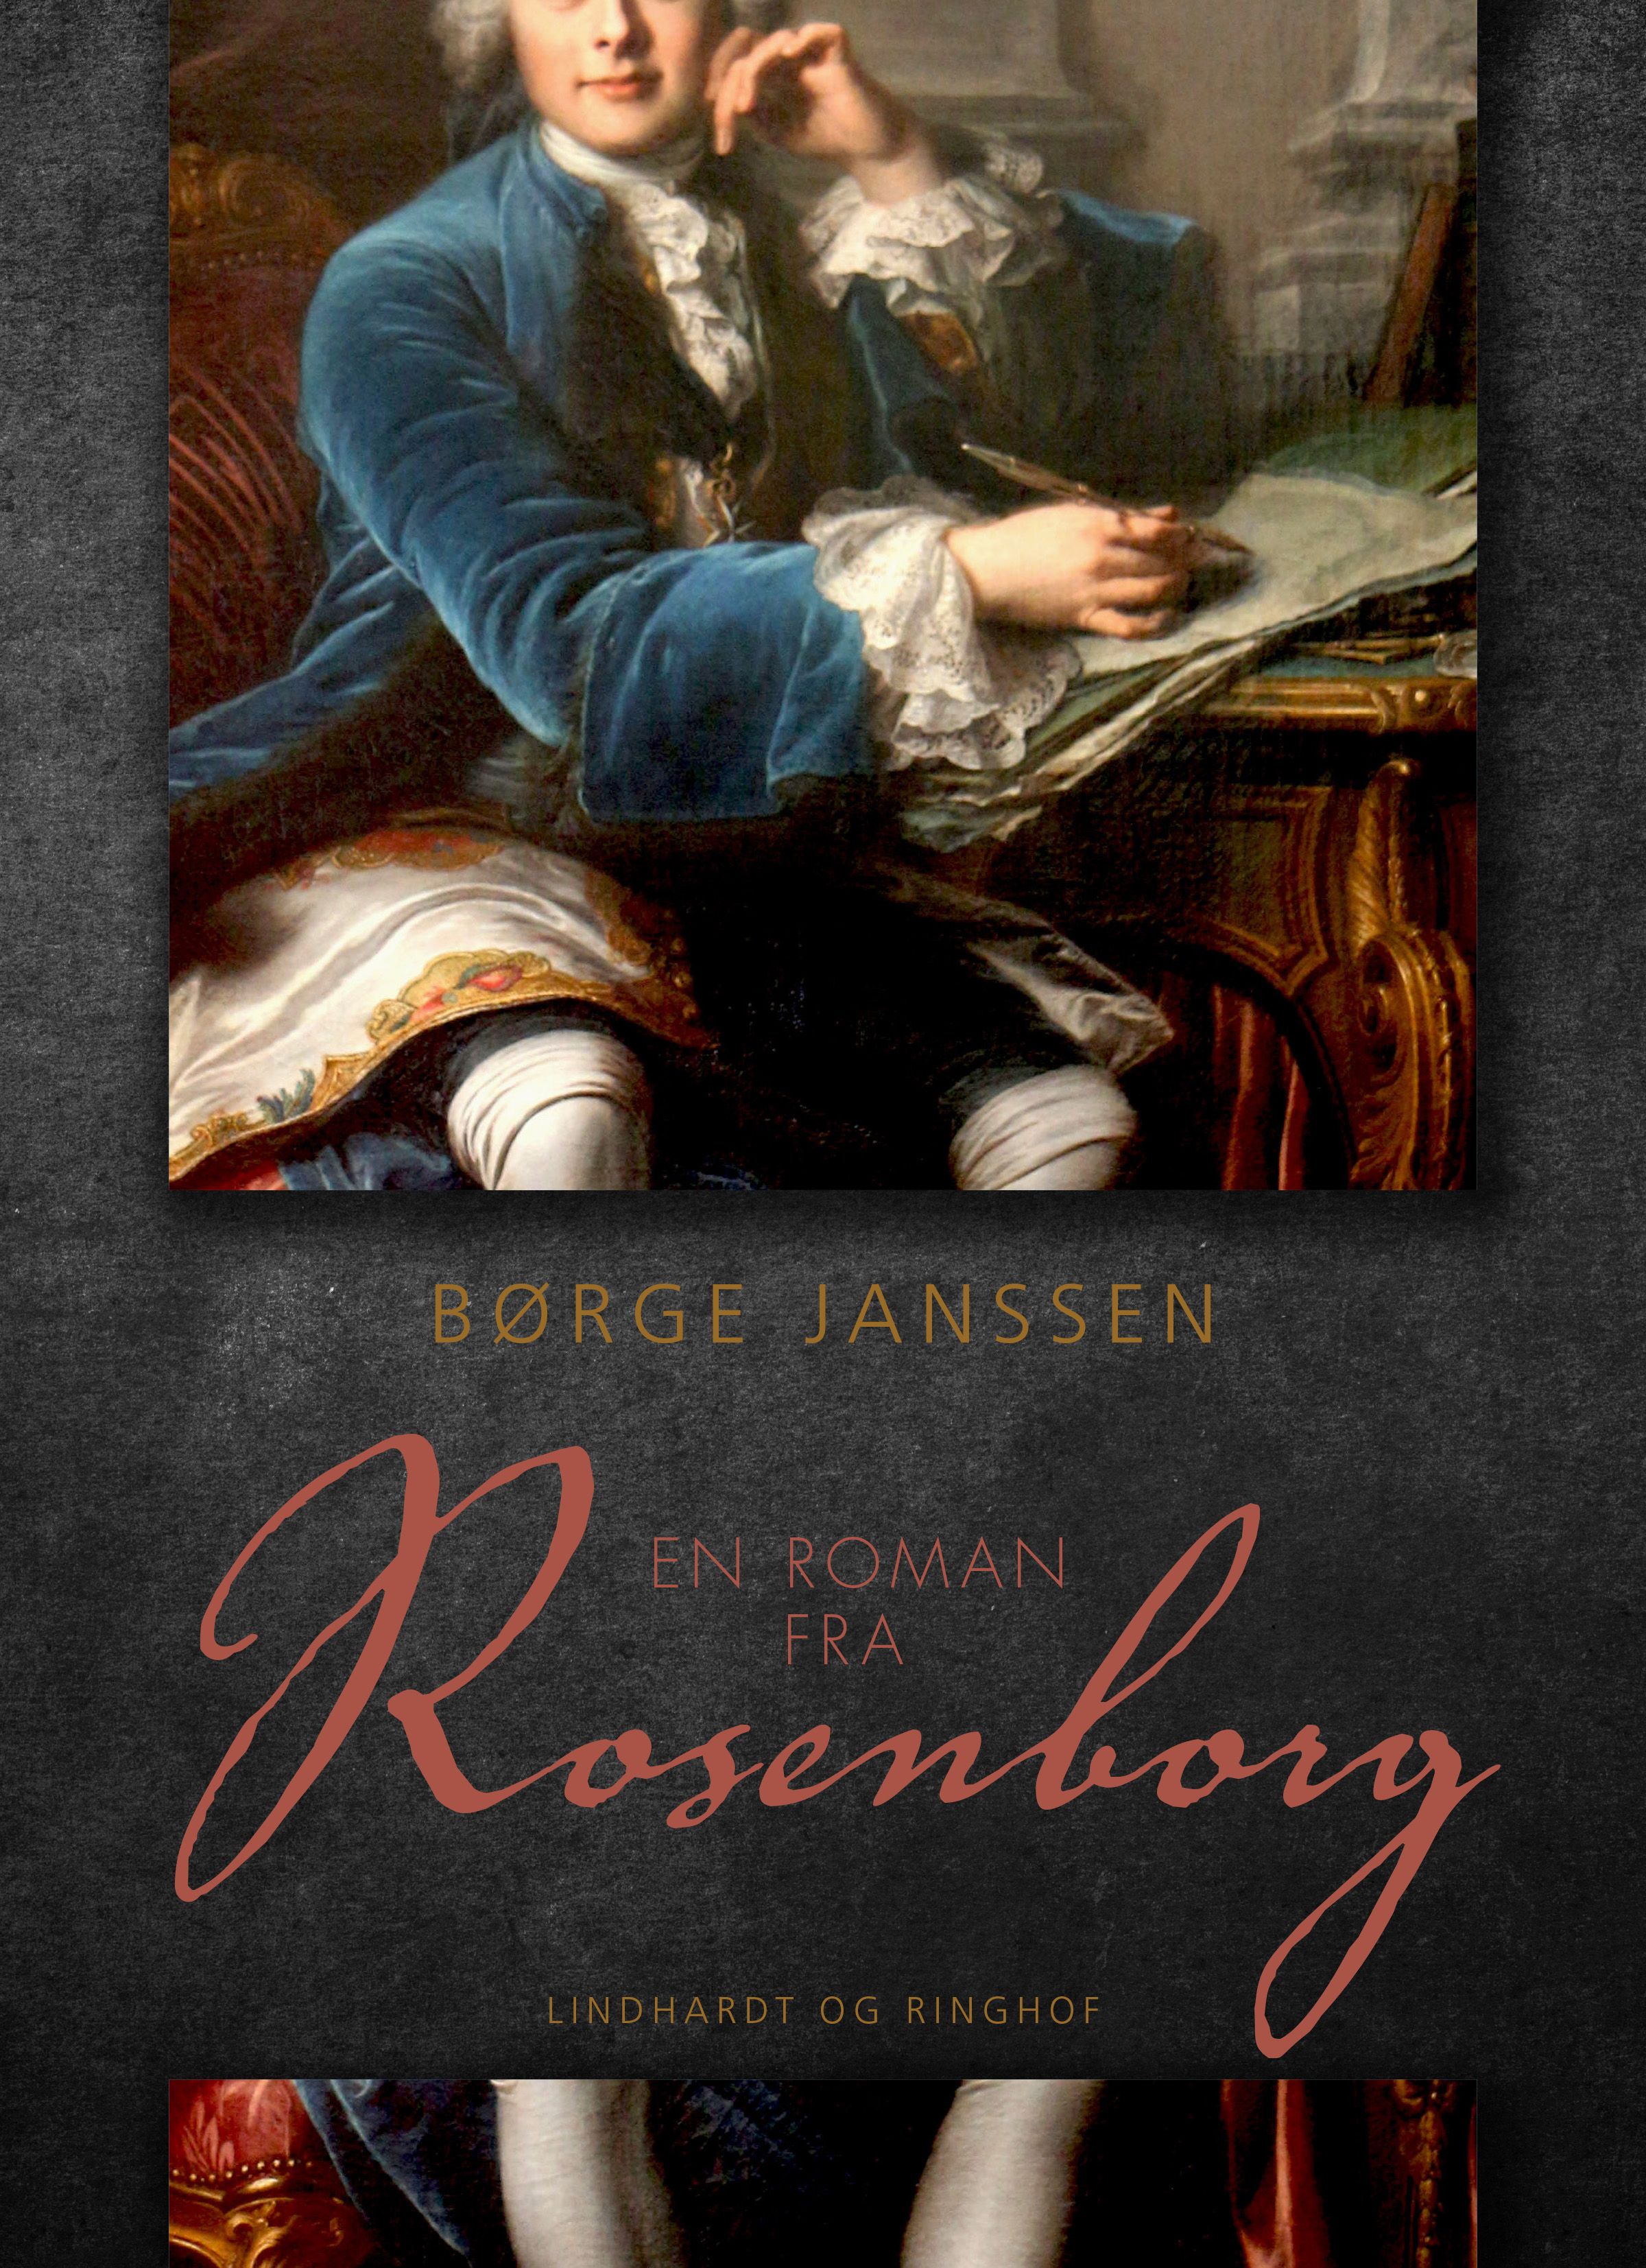 En roman fra Rosenborg, eBook by Børge Janssen